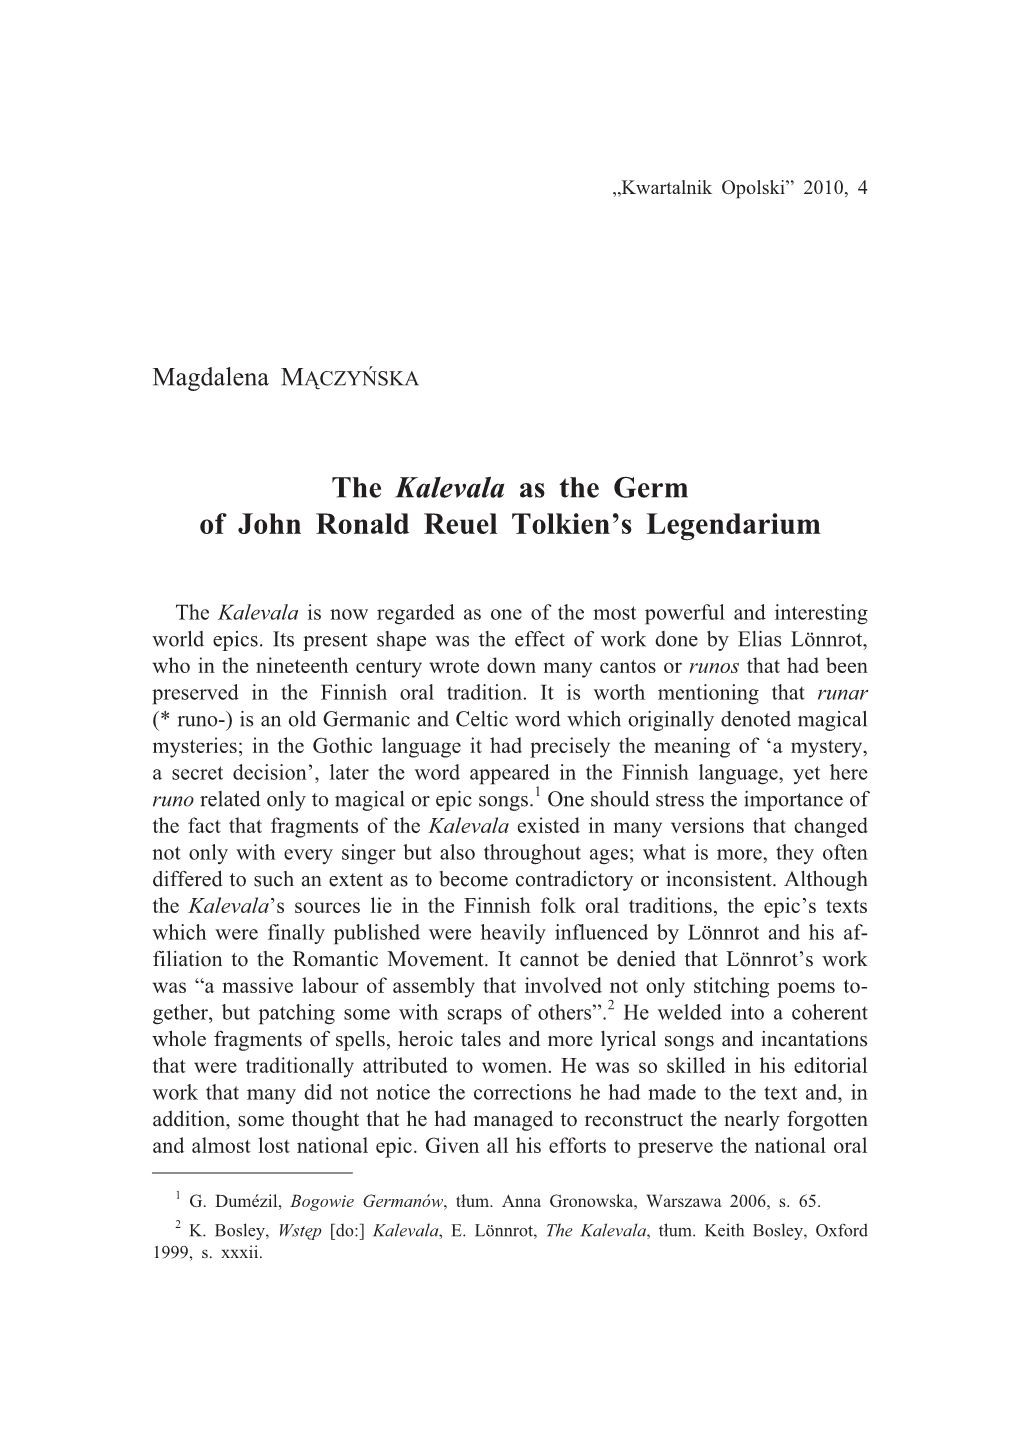 The Kalevala As the Germ of John Ronald Reuel Tolkien's Legendarium